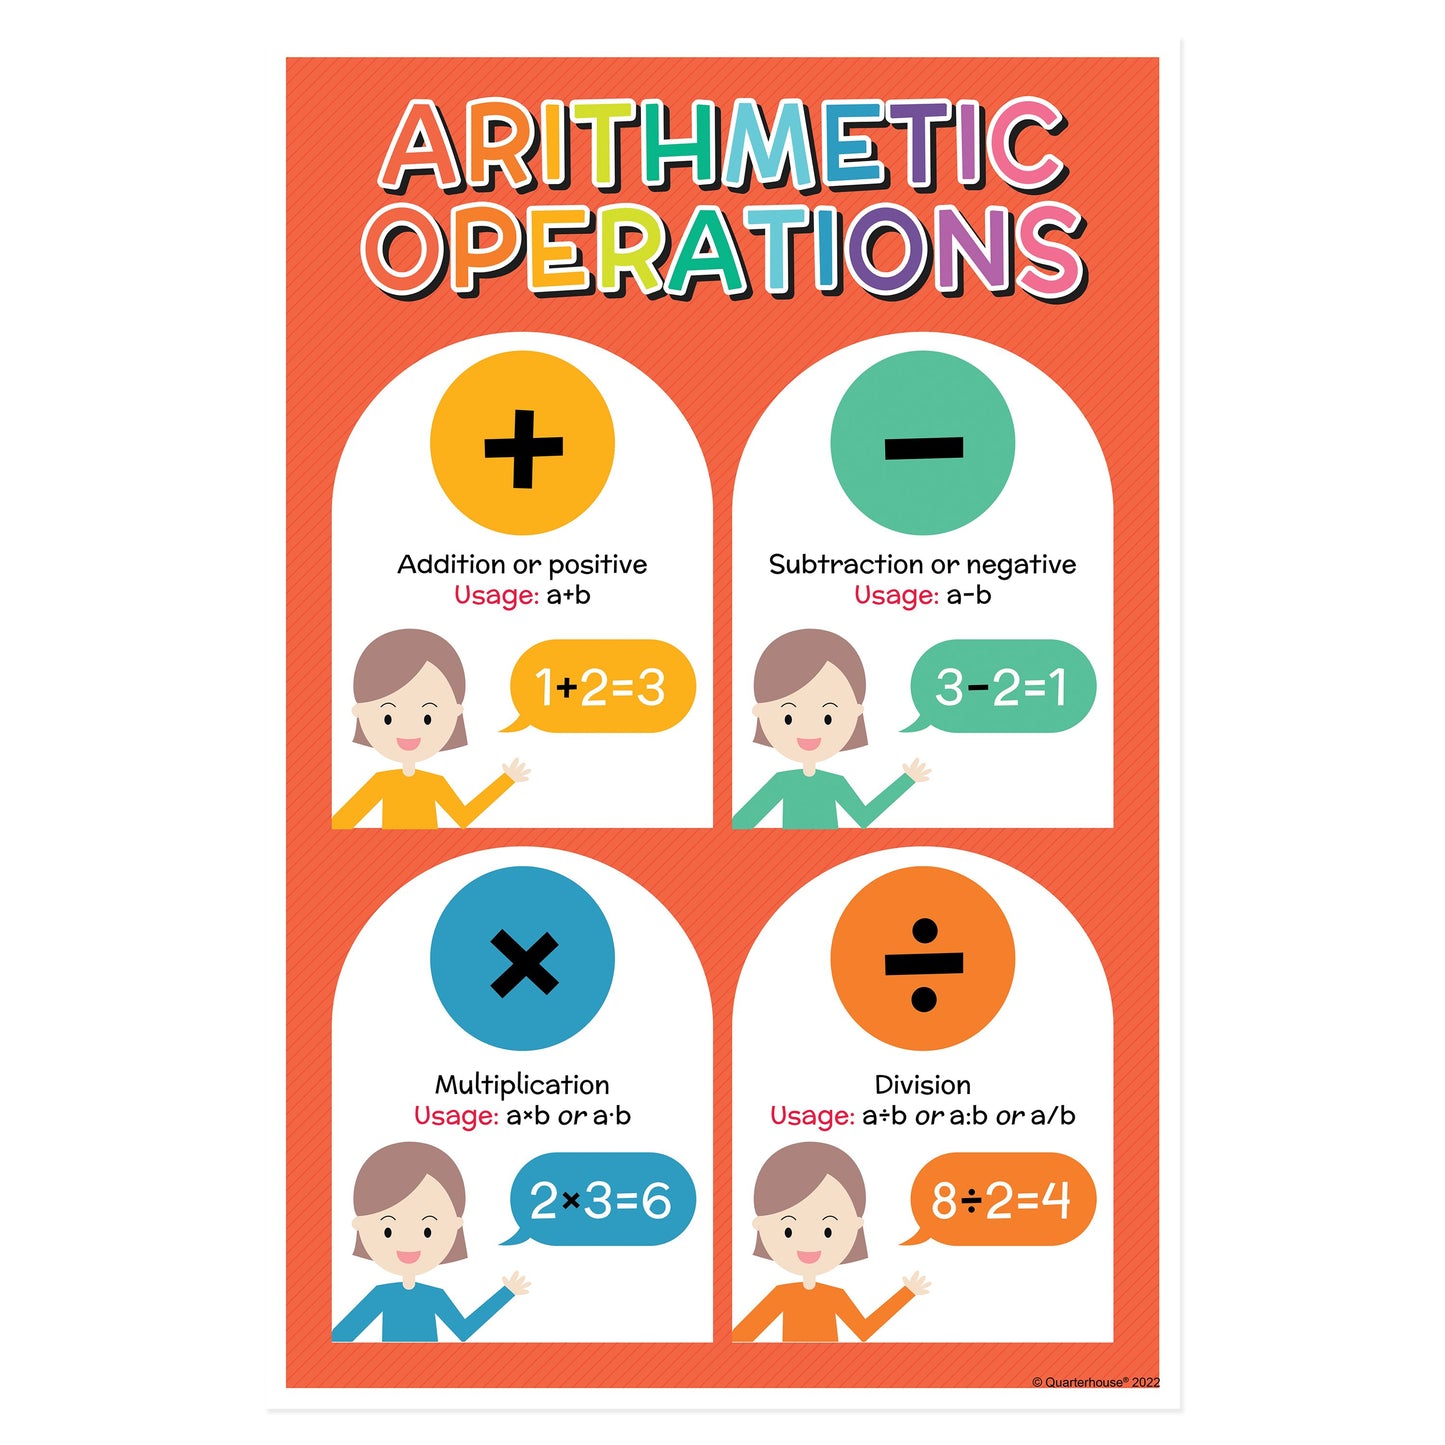 Quarterhouse Arithmetic Math Operations Poster, Math Classroom Materials for Teachers